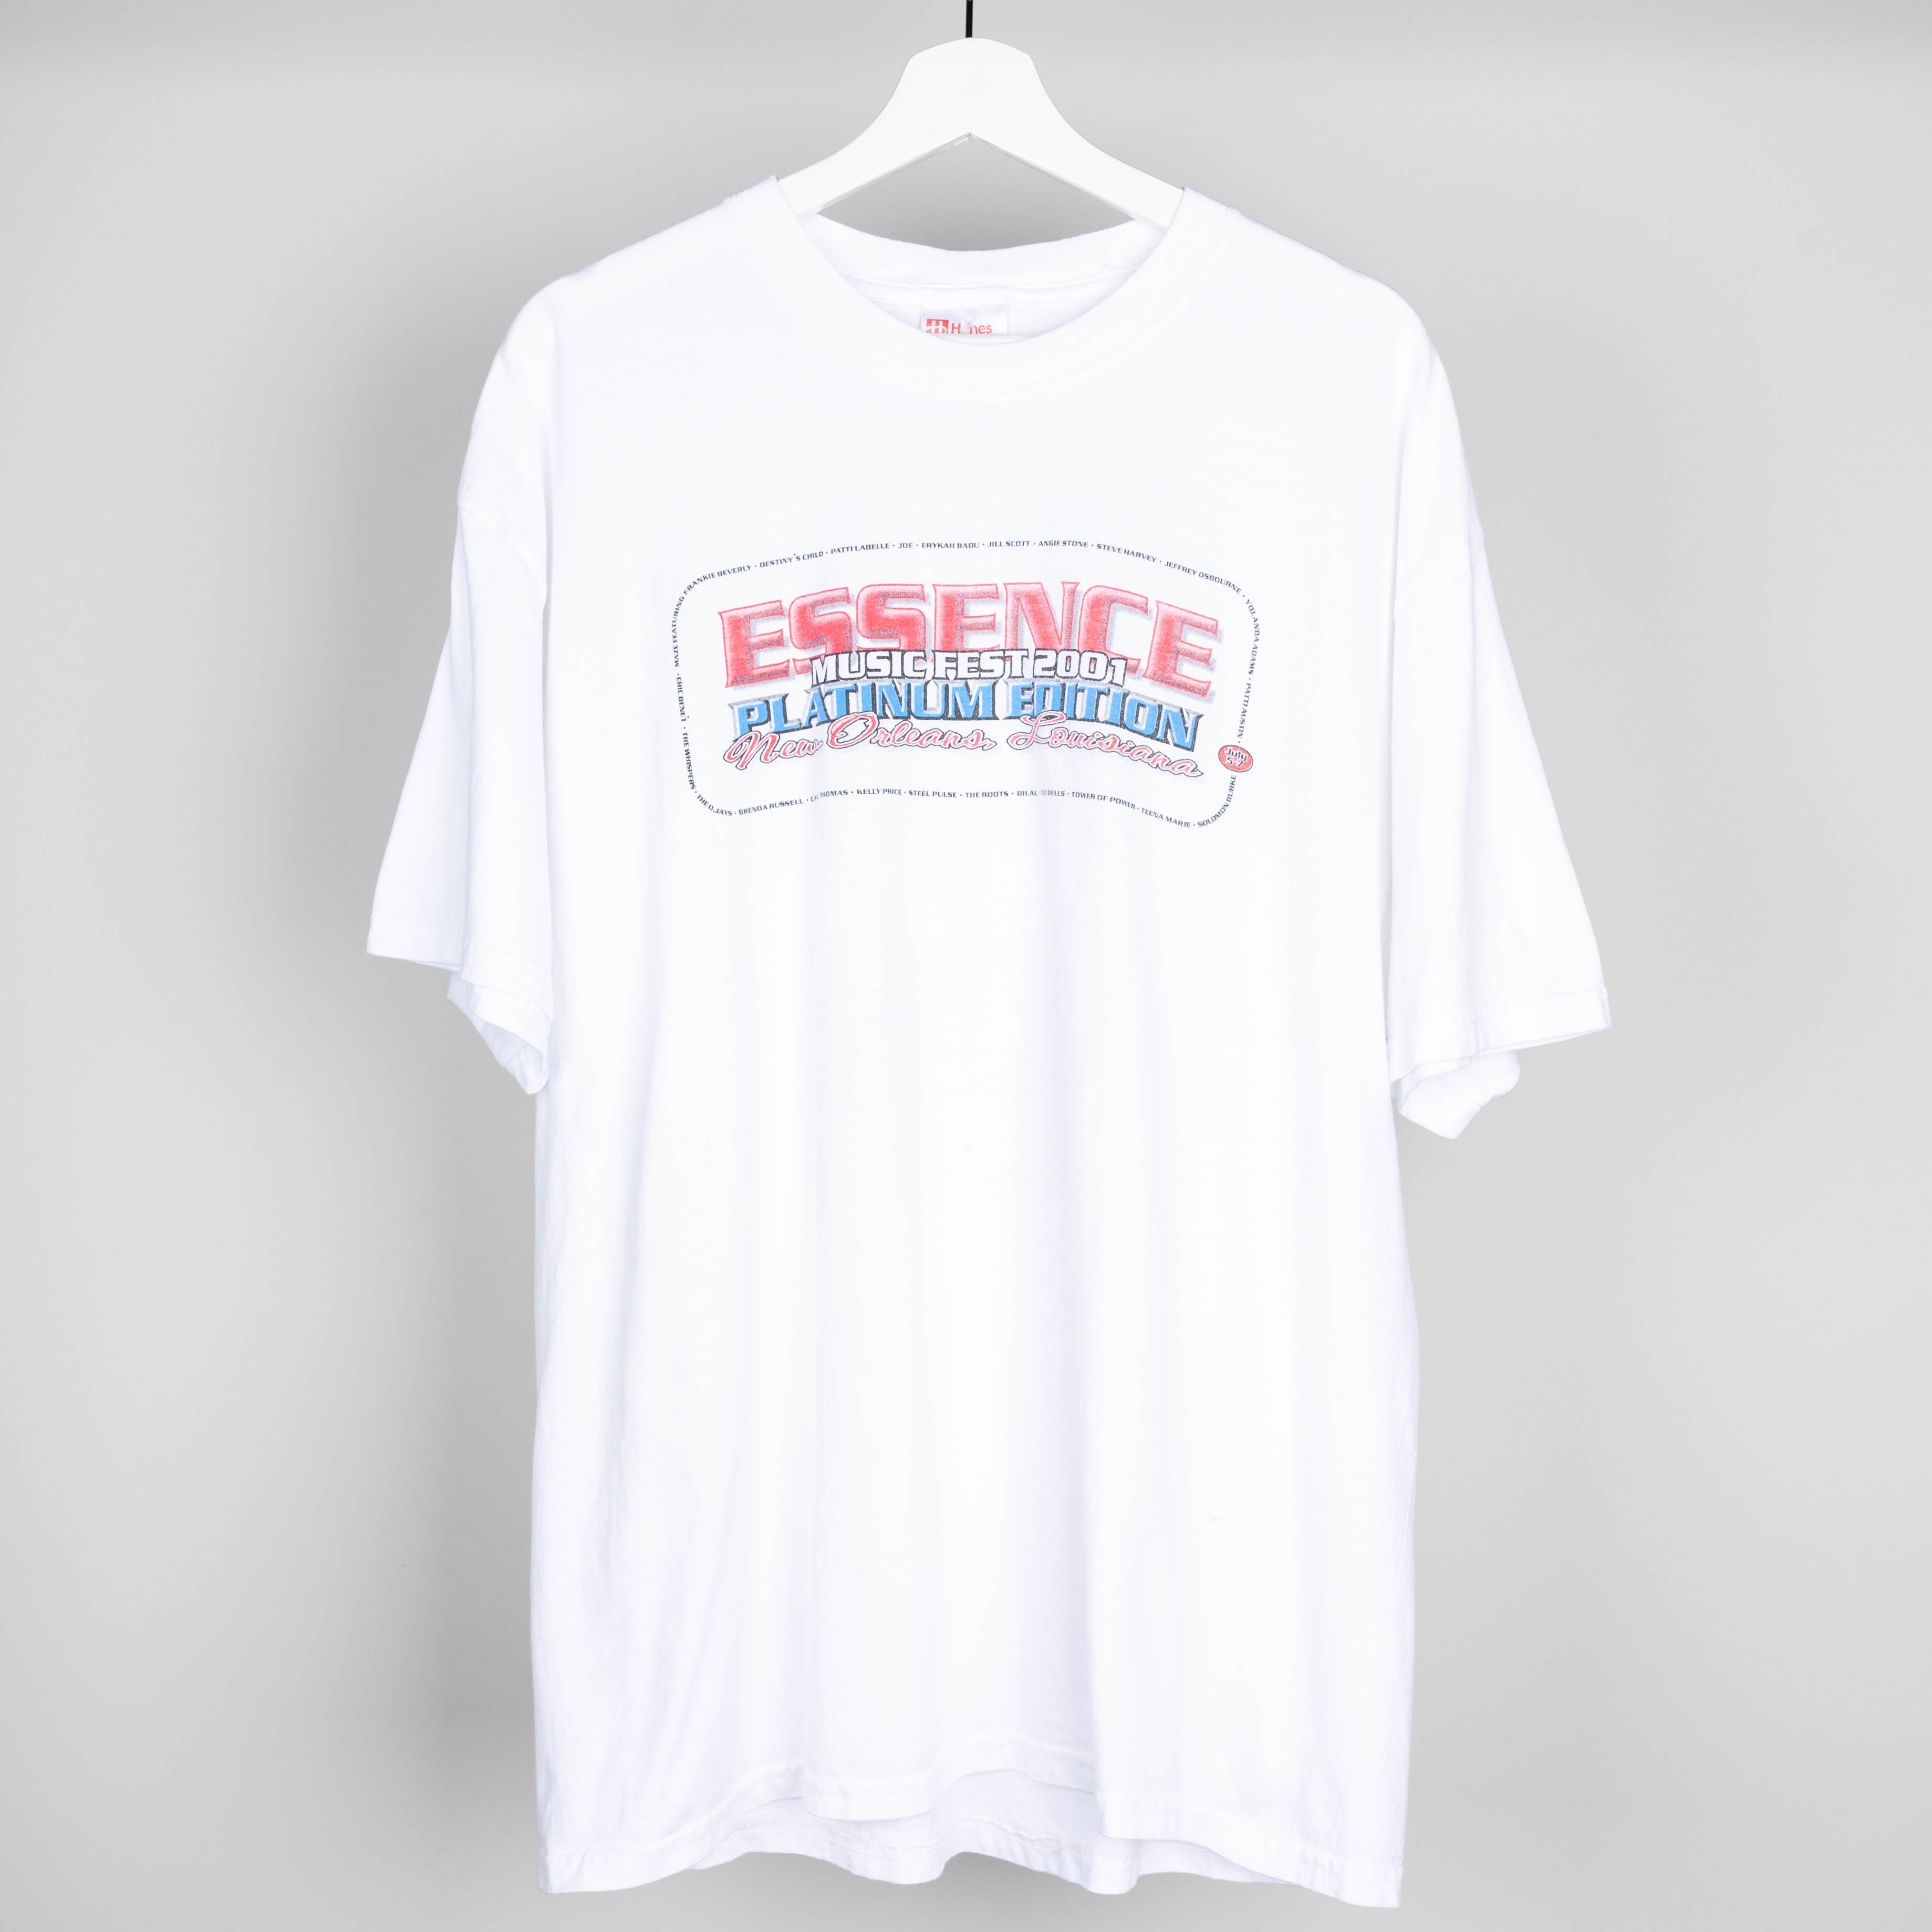 2001 Essence Music Festival T-Shirt Size XL